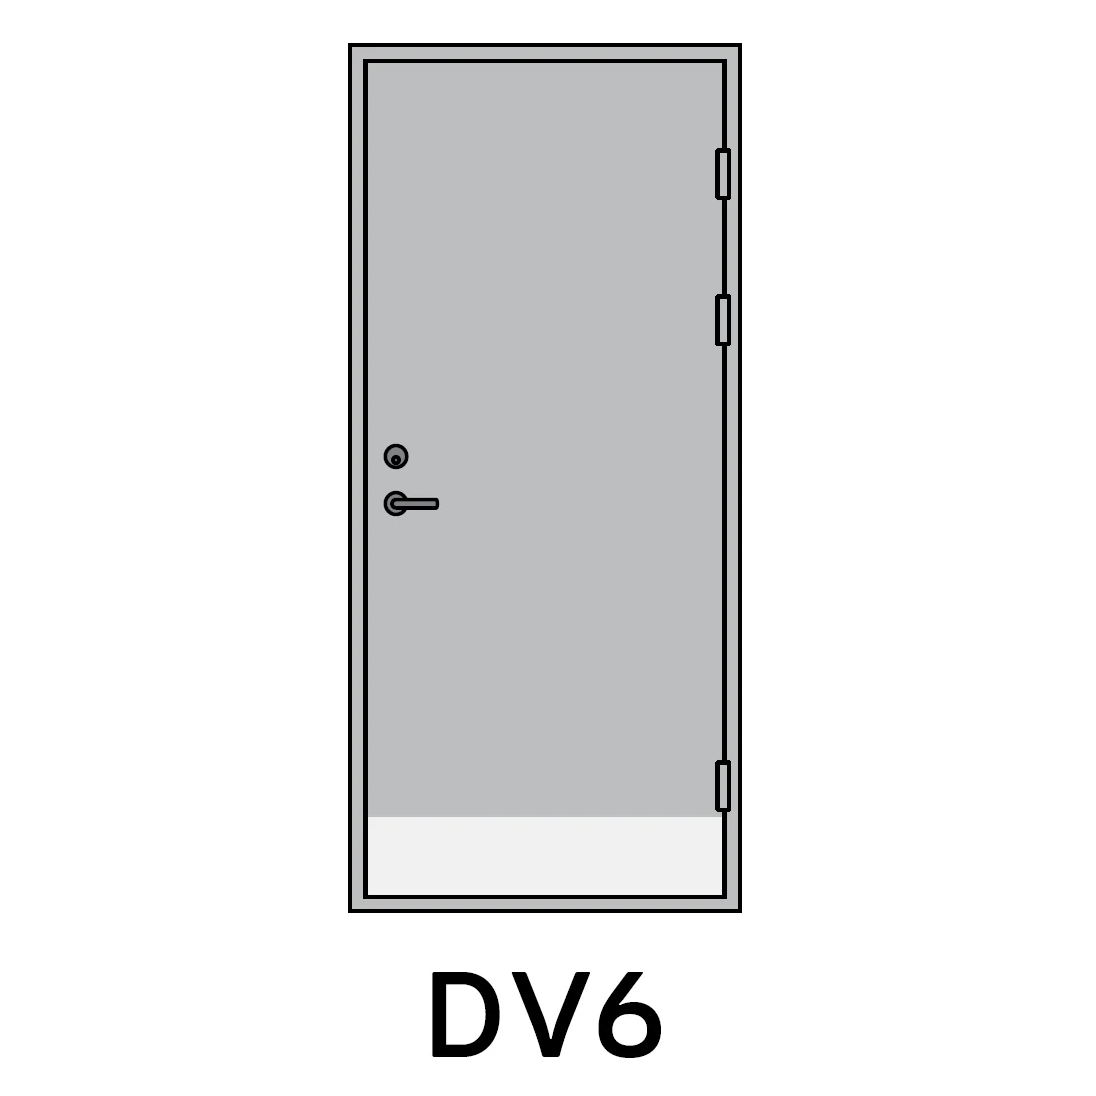 DV6 - 15cm